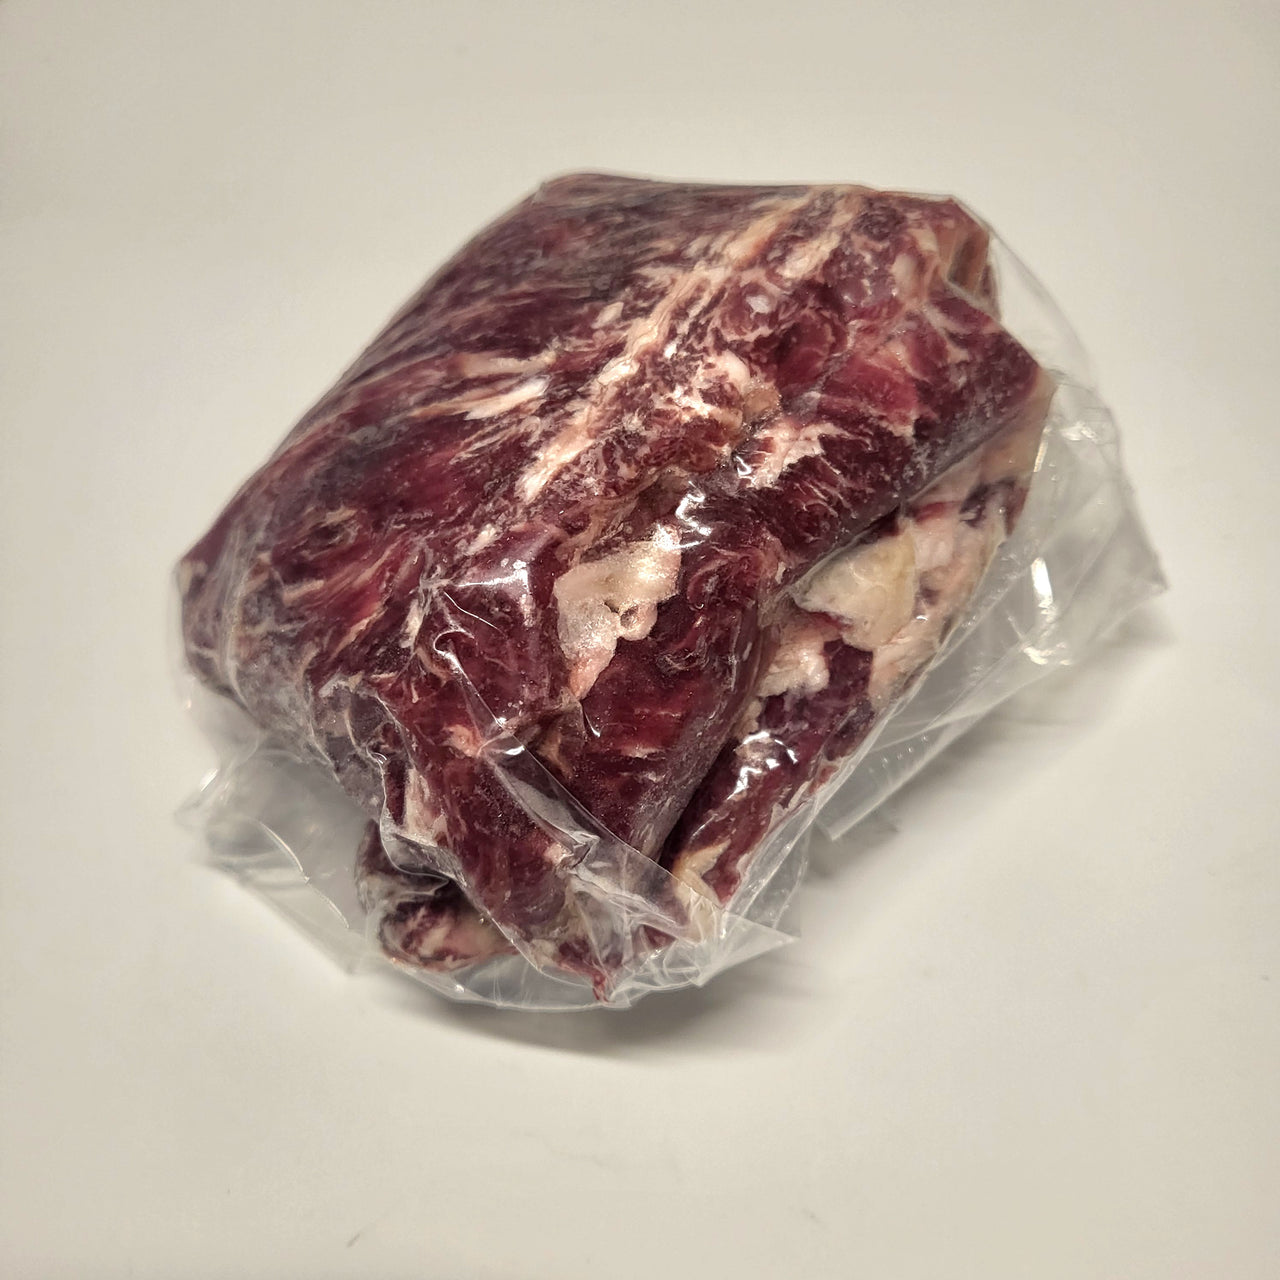 Grass Fed Grass Finished Beef Skirt Steak, OUTSIDE Cut Japanese Akaushi (Brown aka: Red) Wagyu Beef Full Blood AGED 21+ Days